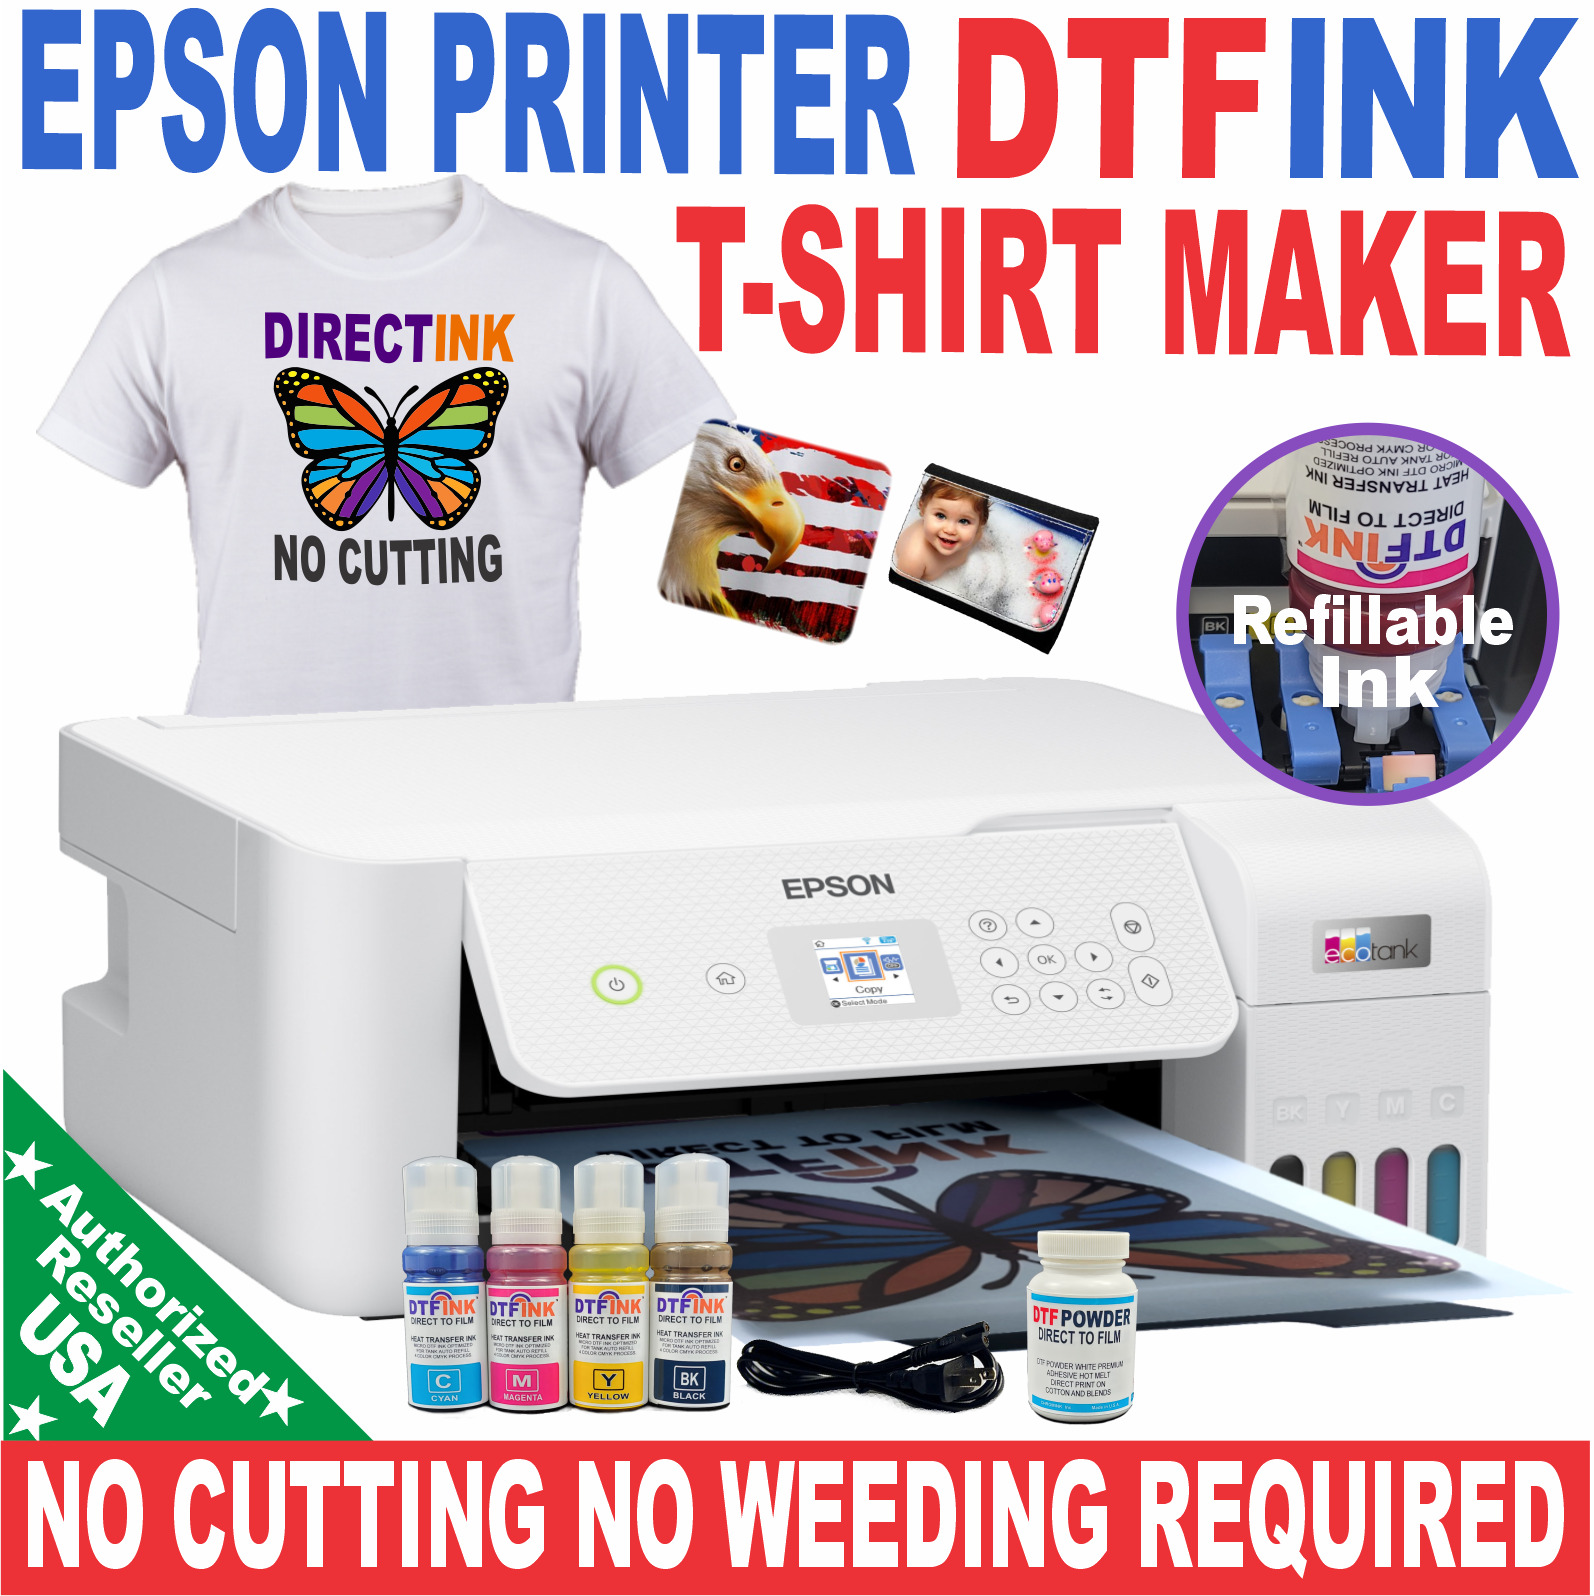 EPSON PRINTER WITH DTF INK HEAT TRANSFER PRINT COTTON T-SHIRT NO CUT START KIT